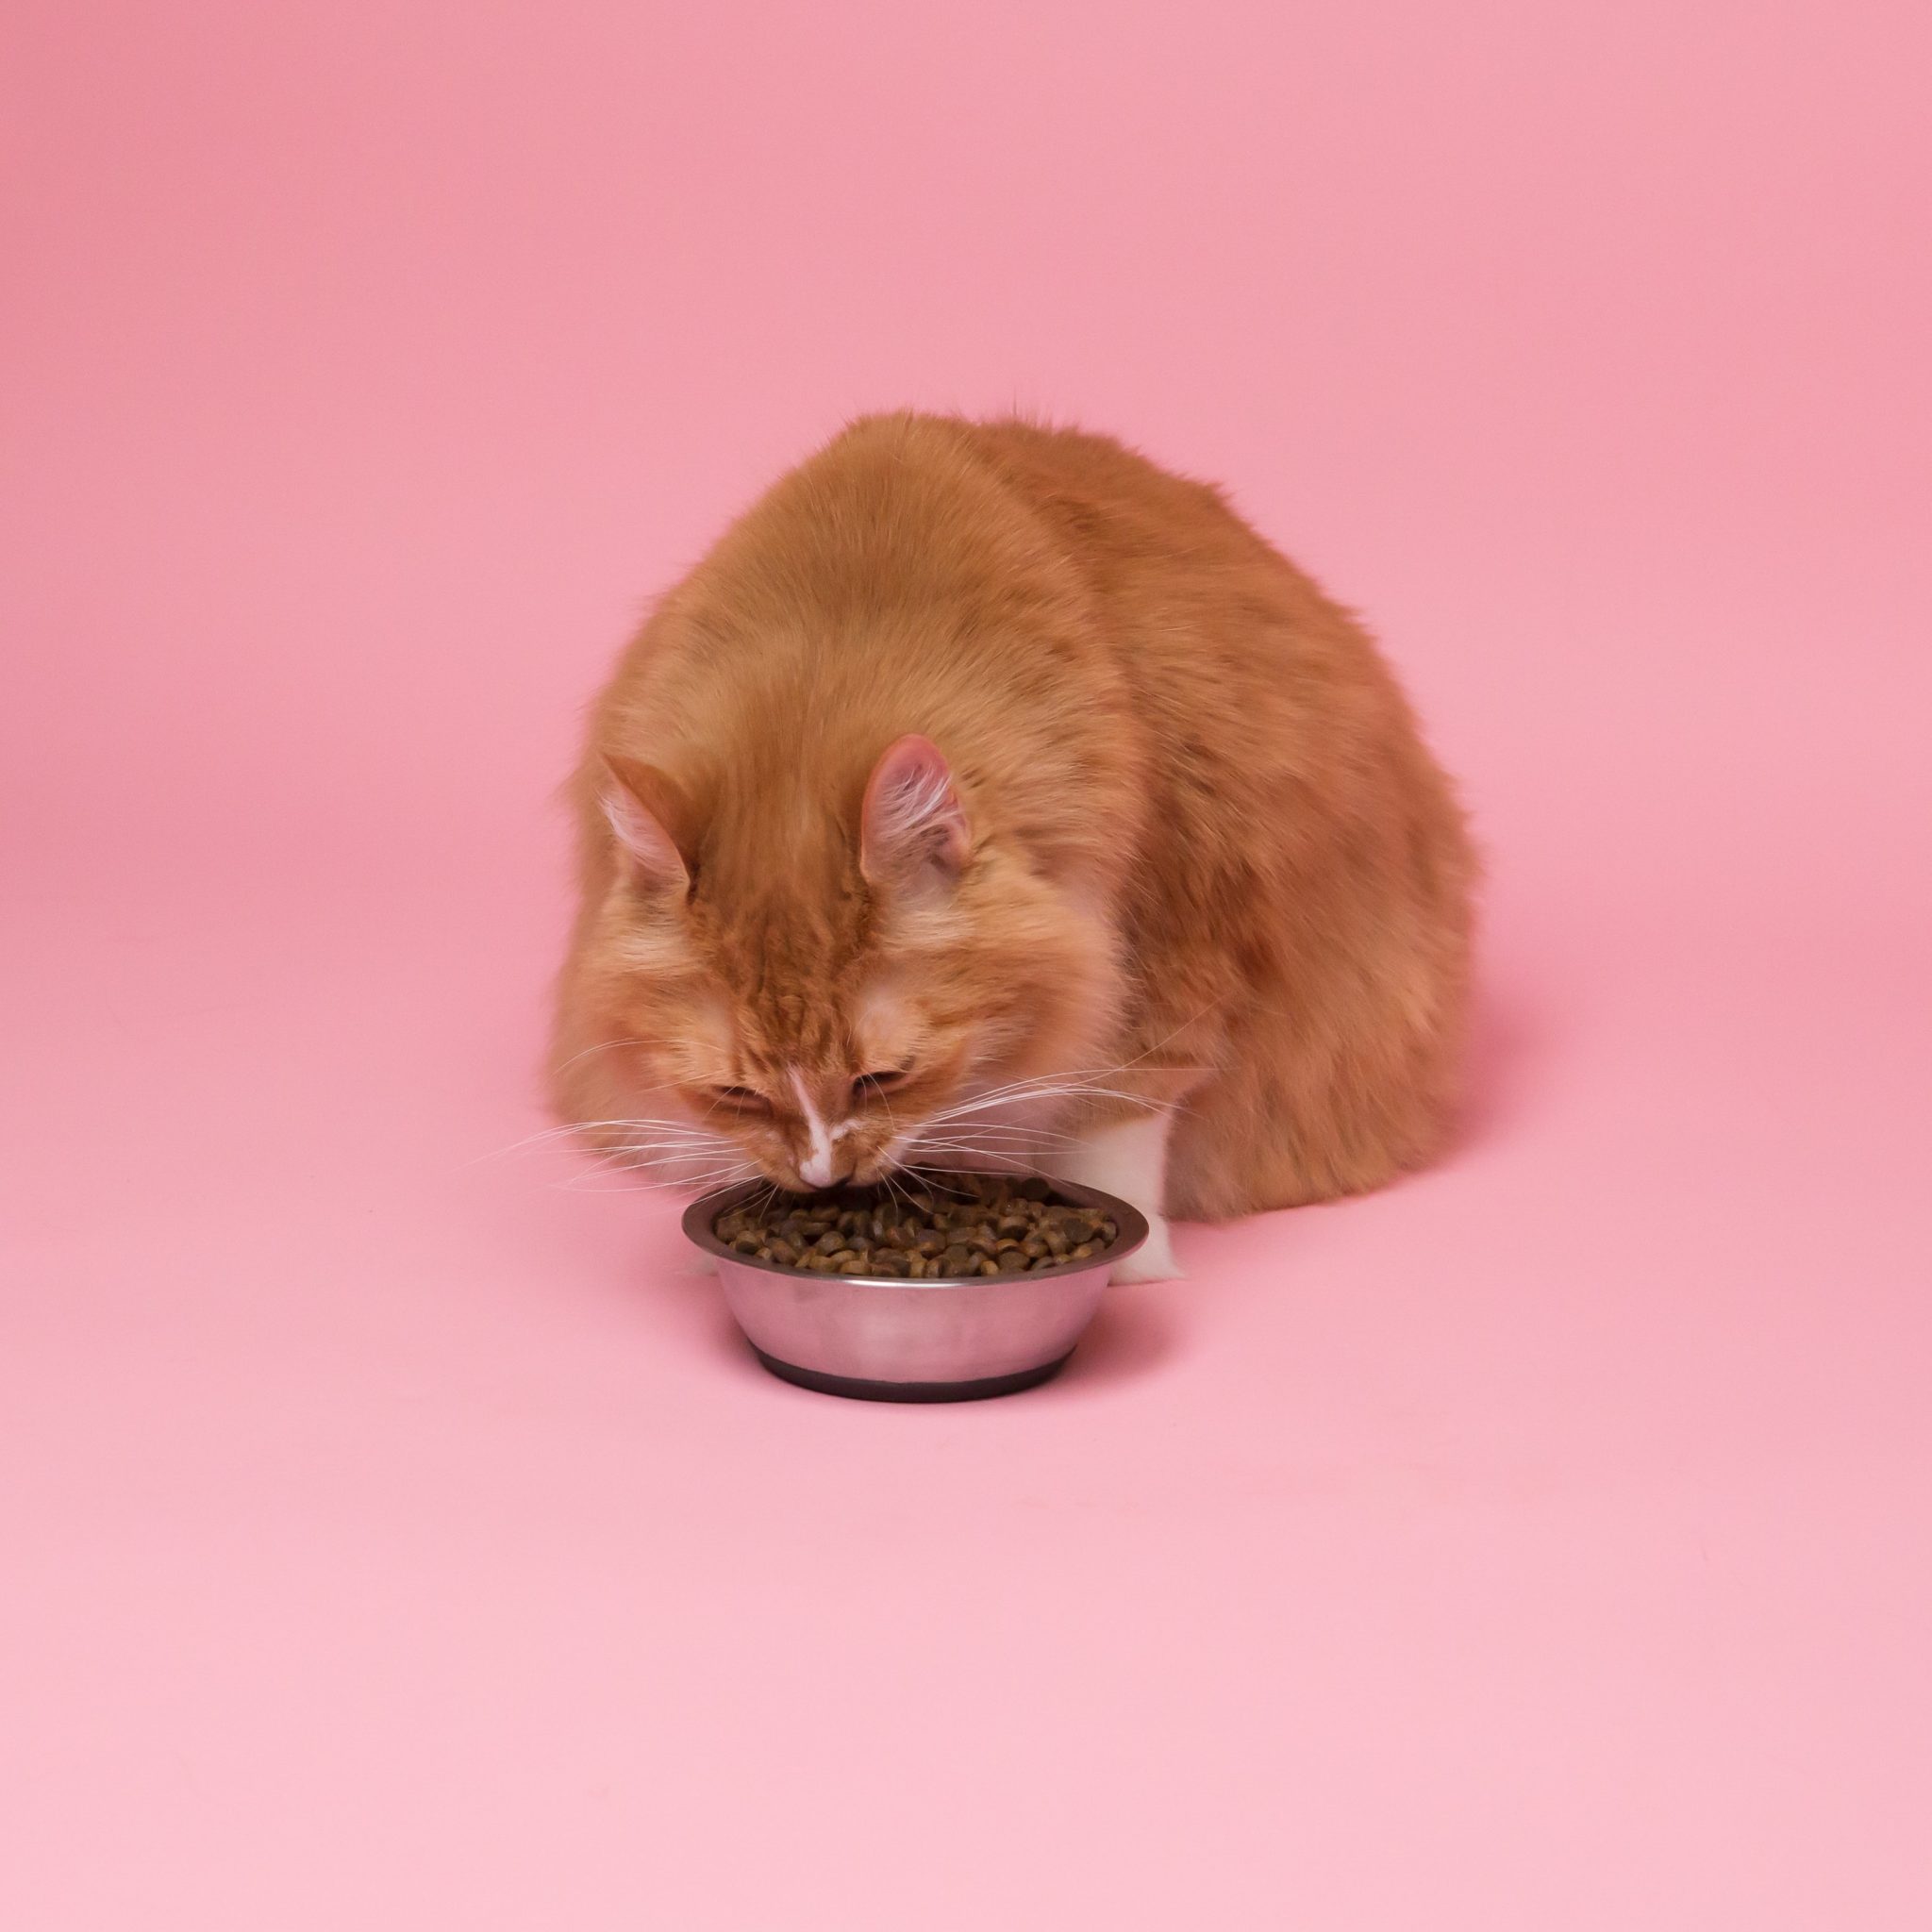 What Diet Should A Cat With Diarrhea Follow?